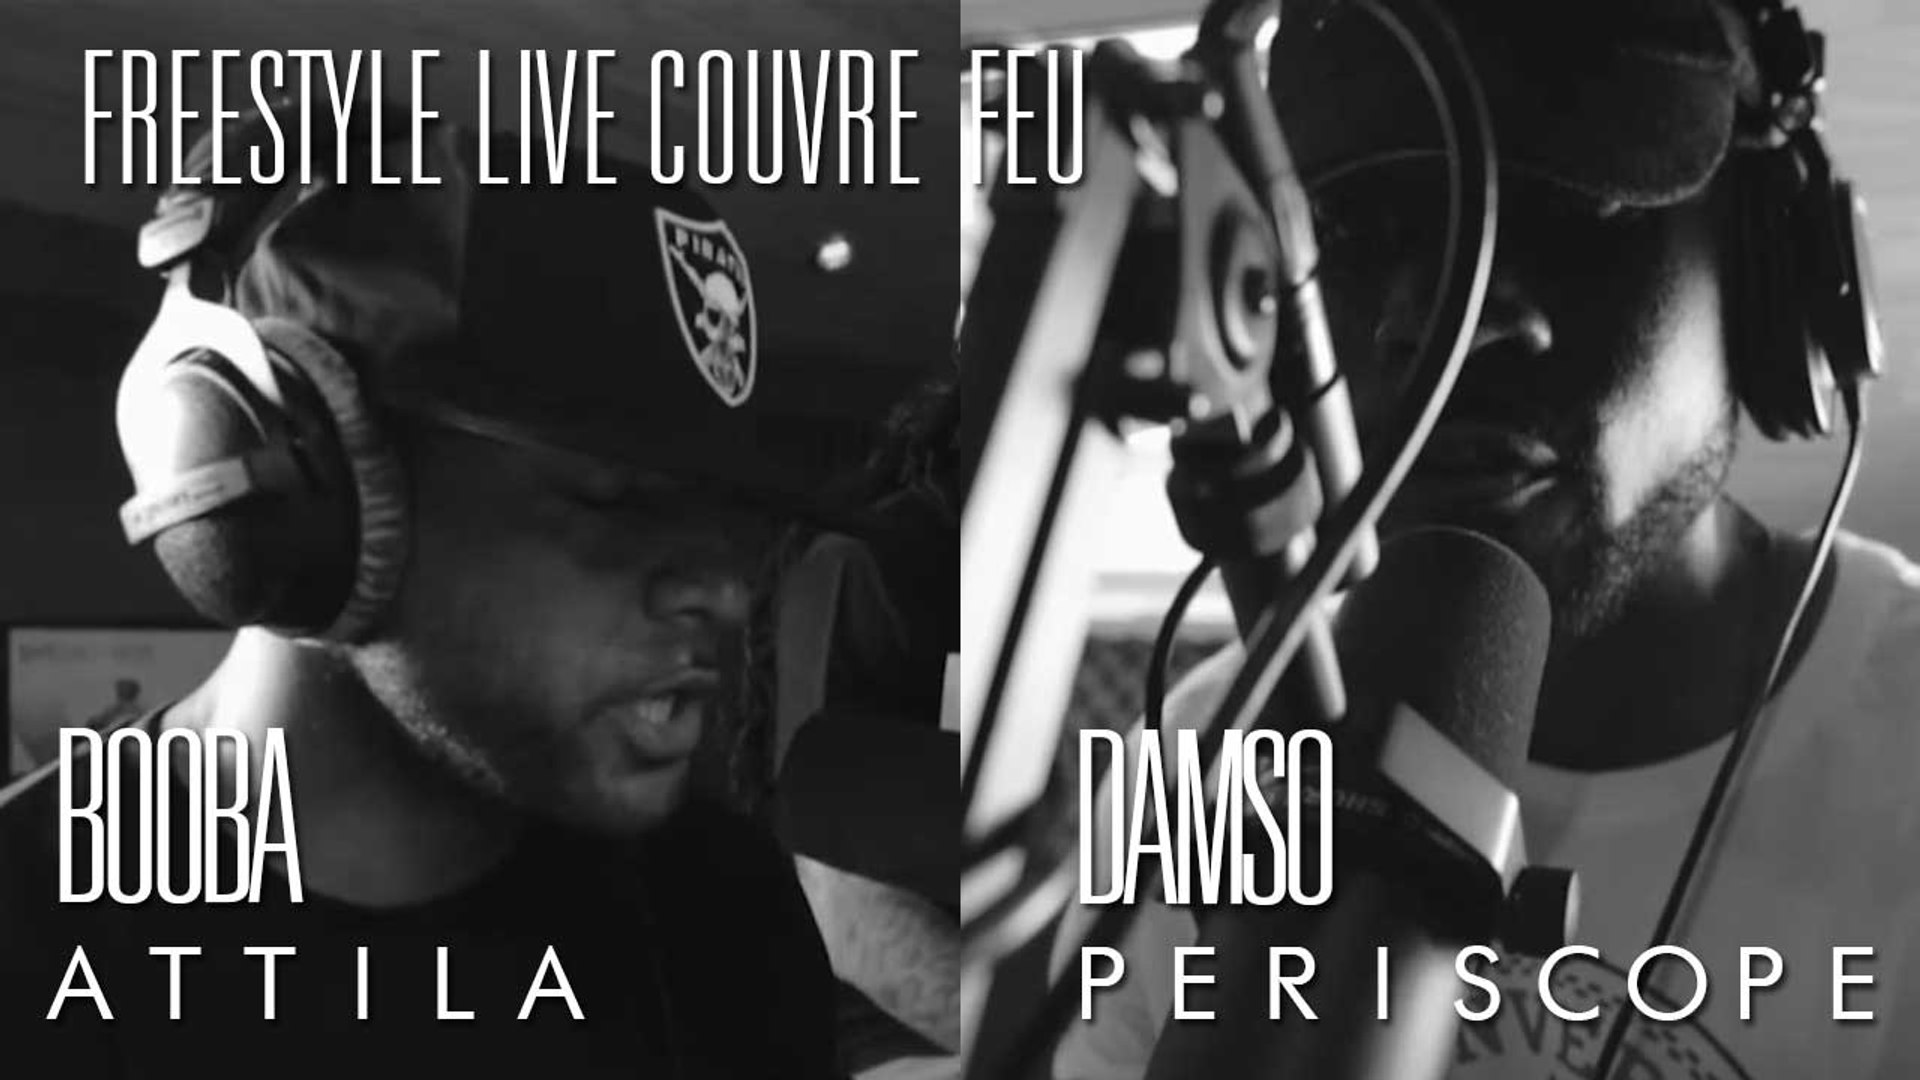 Freestyle Booba & Damso - Attila/Periscope dans Couvre Feu (OKLM Radio) -  Vidéo Dailymotion